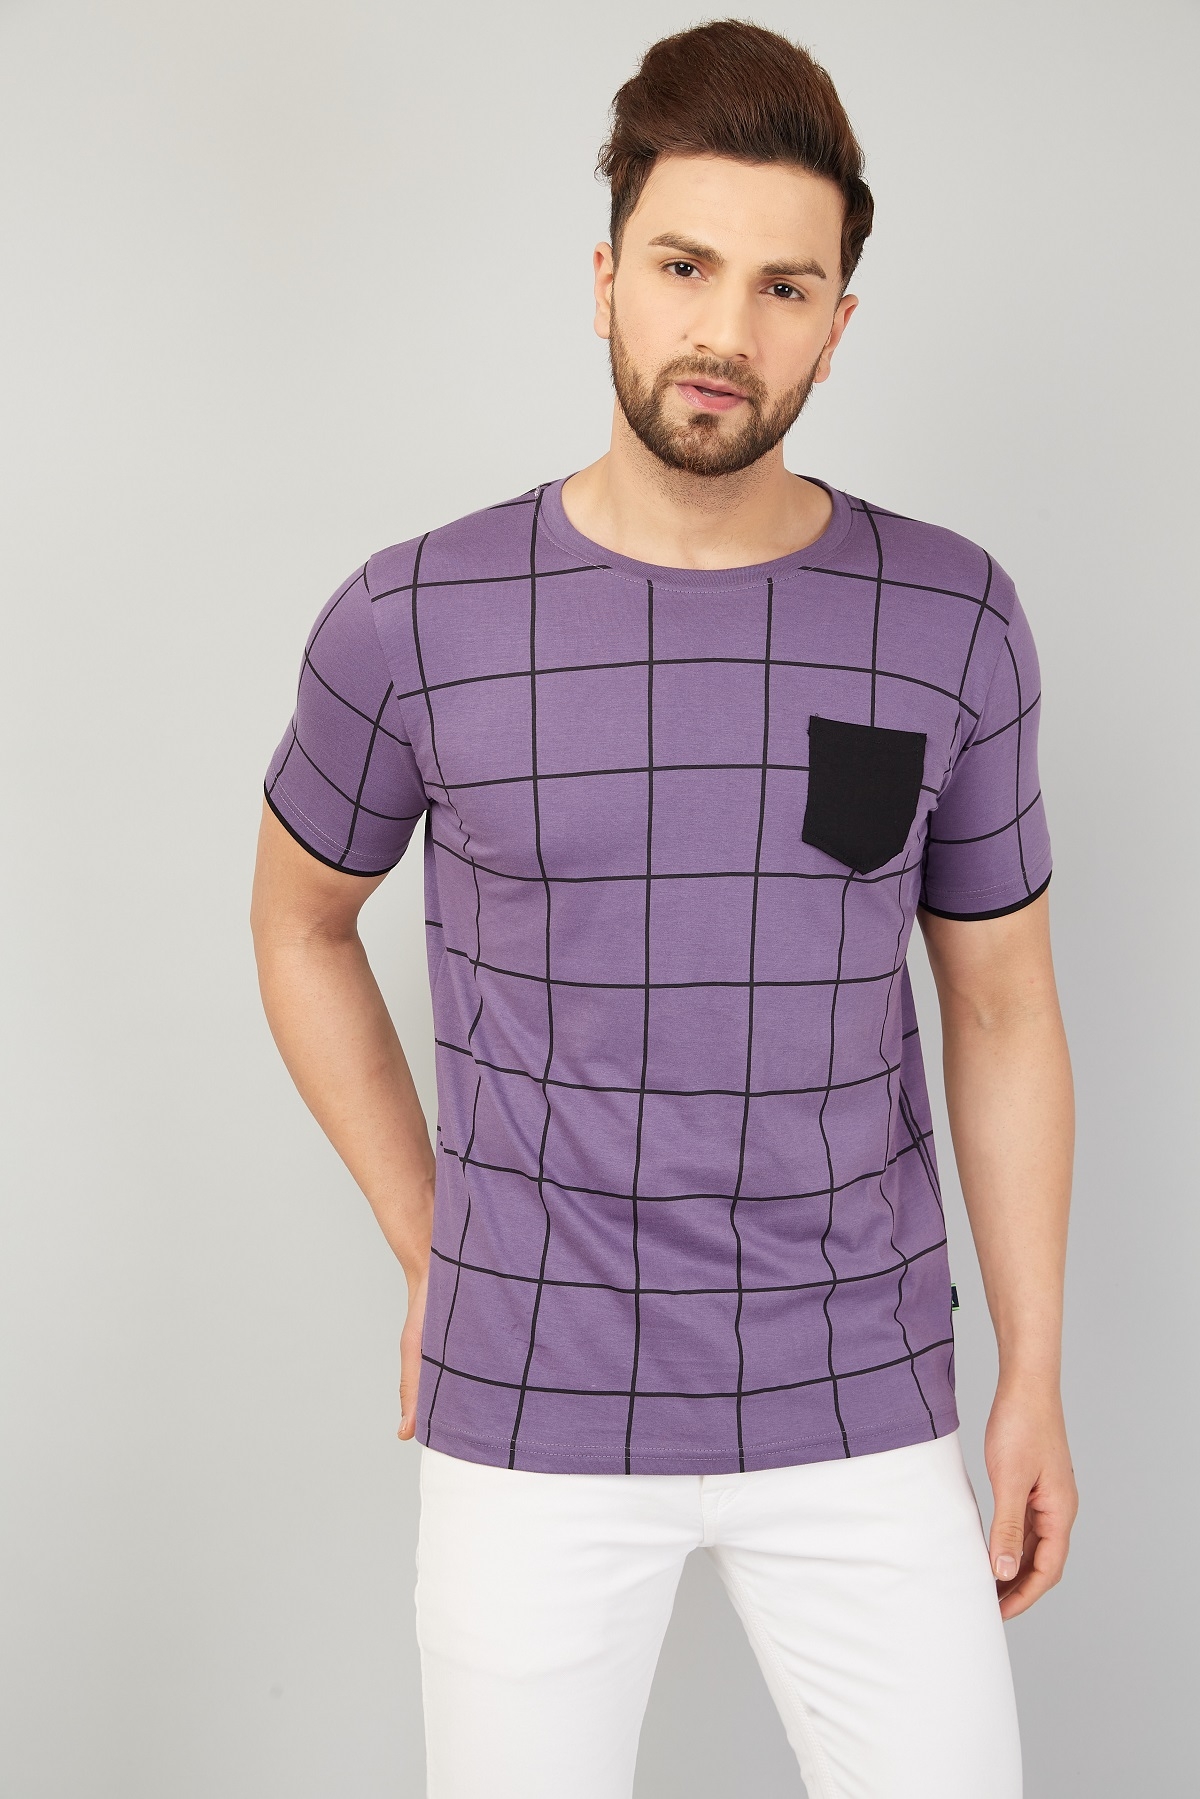 RodZen | Round neck Half Sleeve Purple All Over Printed Cotton Tshirt For Men & Boys 0